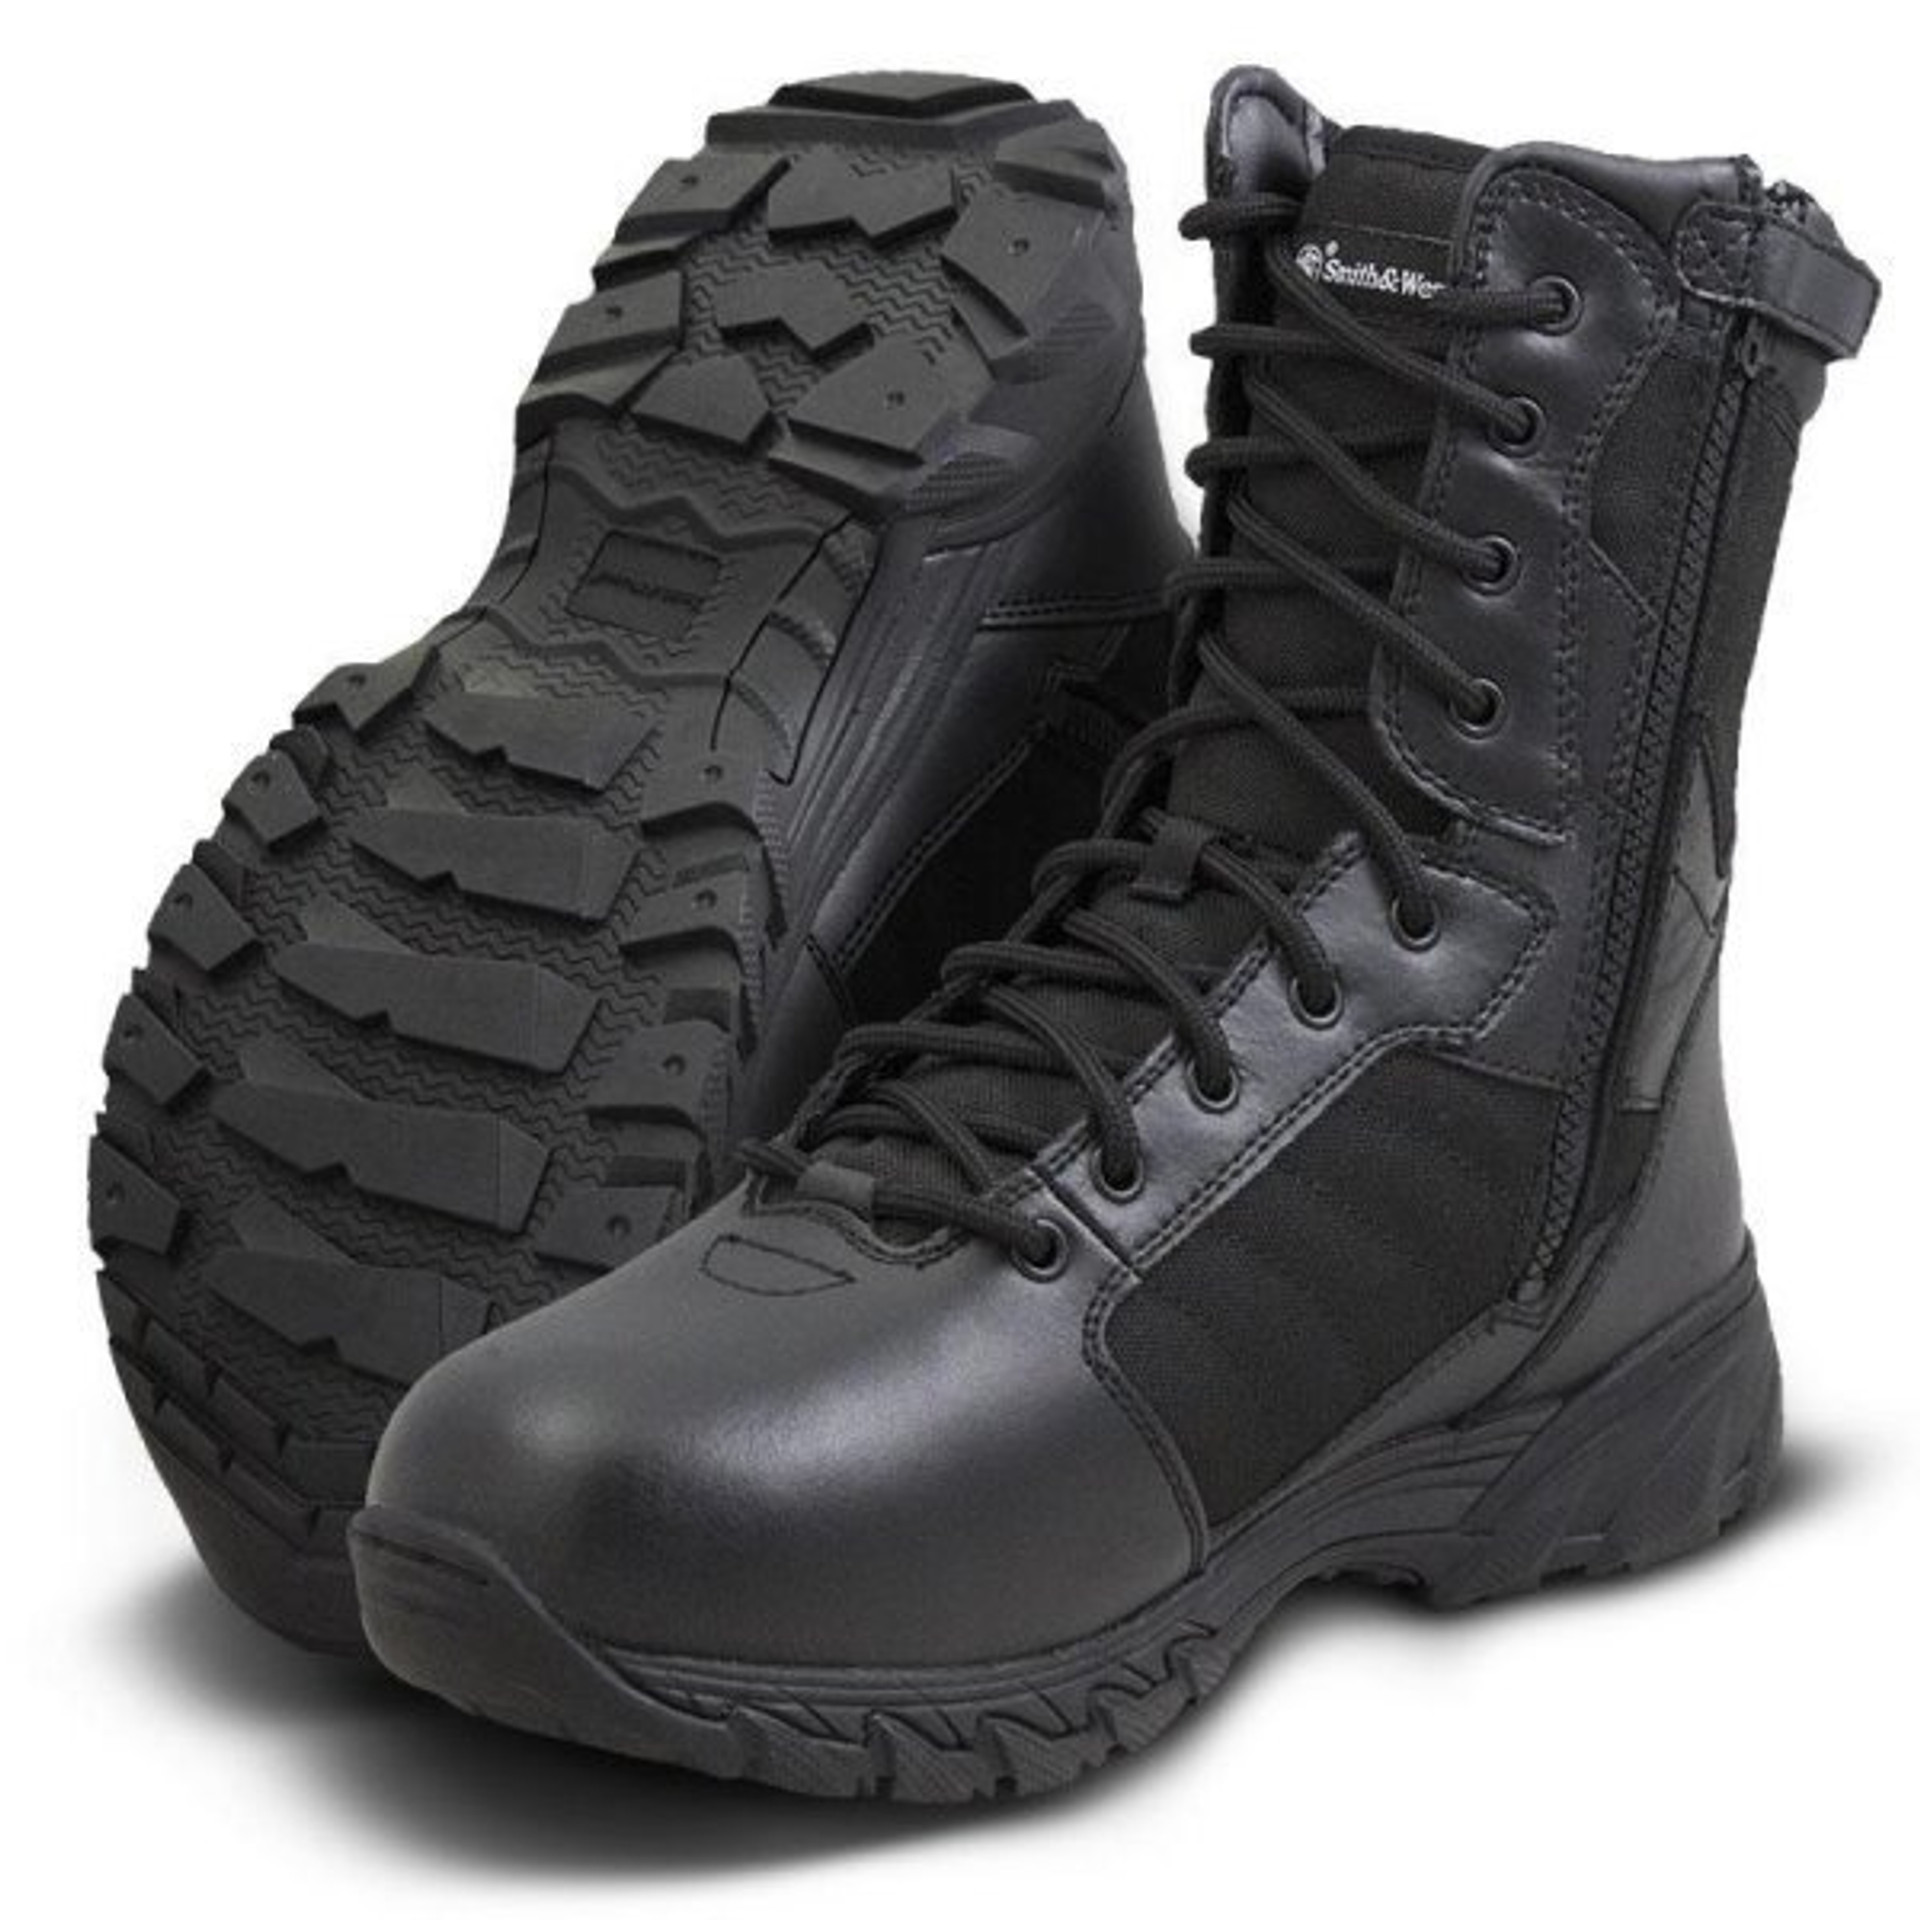 Black Tactical Duty Boots